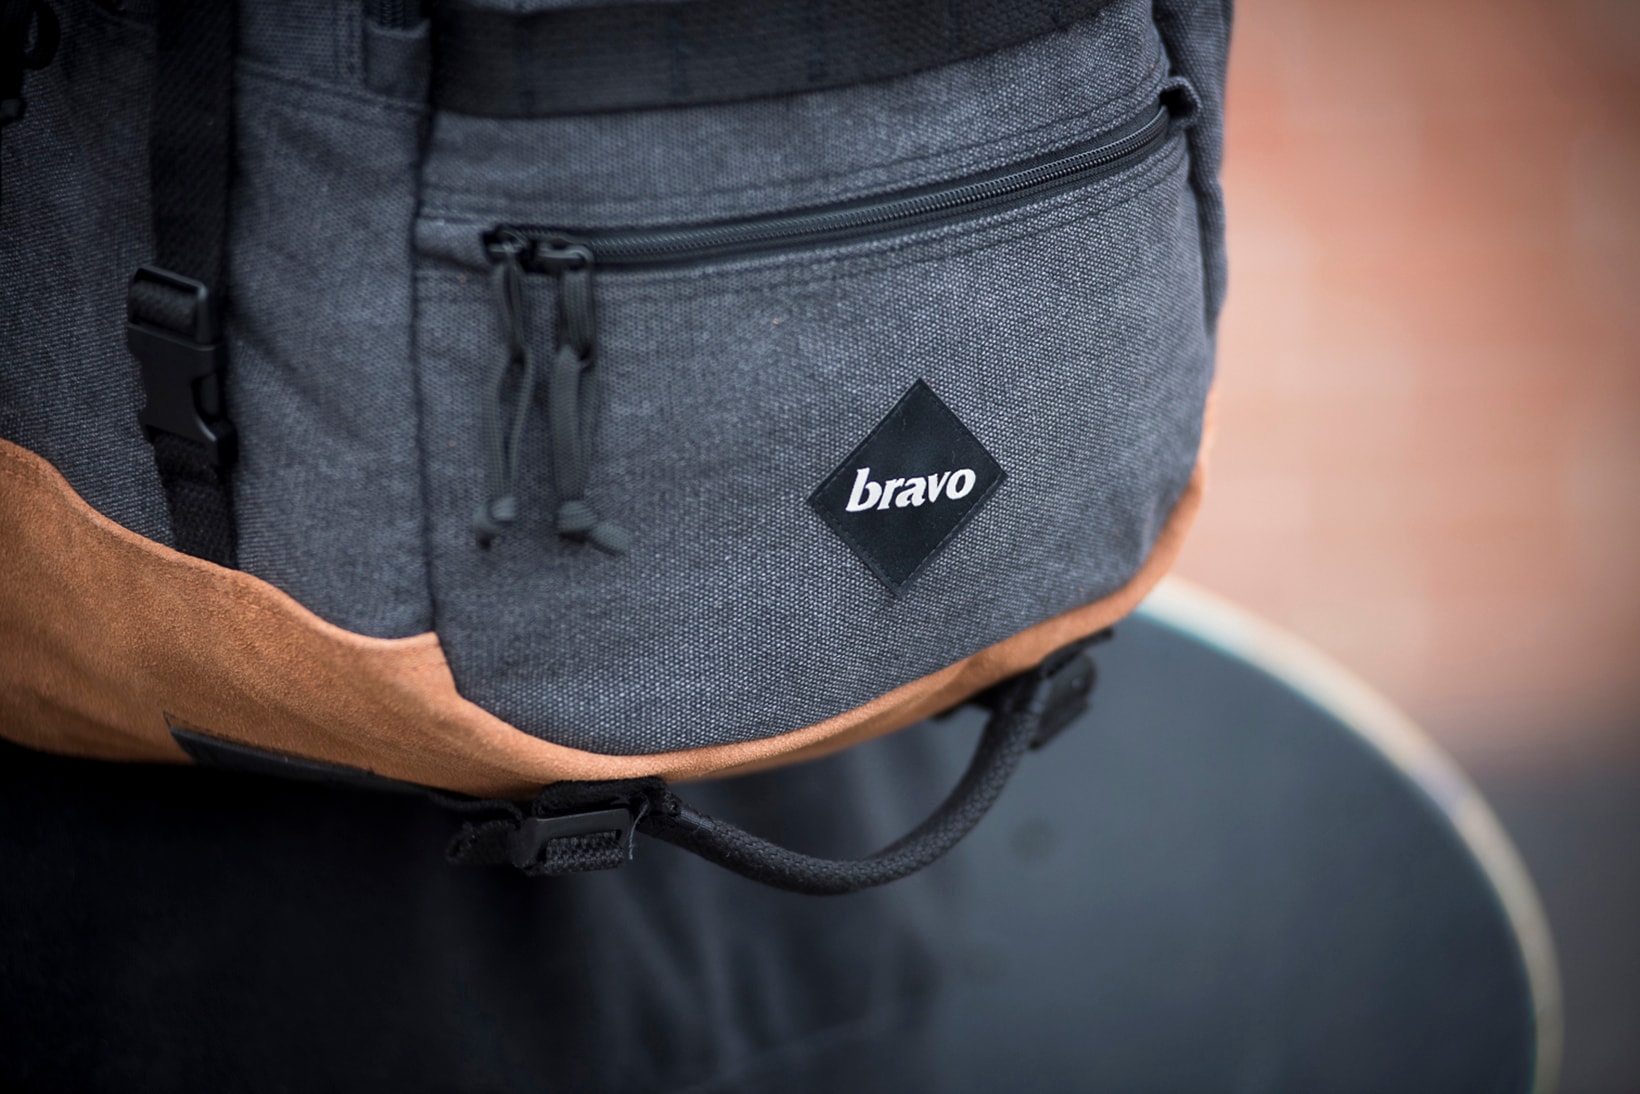 BRAVO Washed Canvas Bags Tote Backpack Shoulder Bag Suede Black White